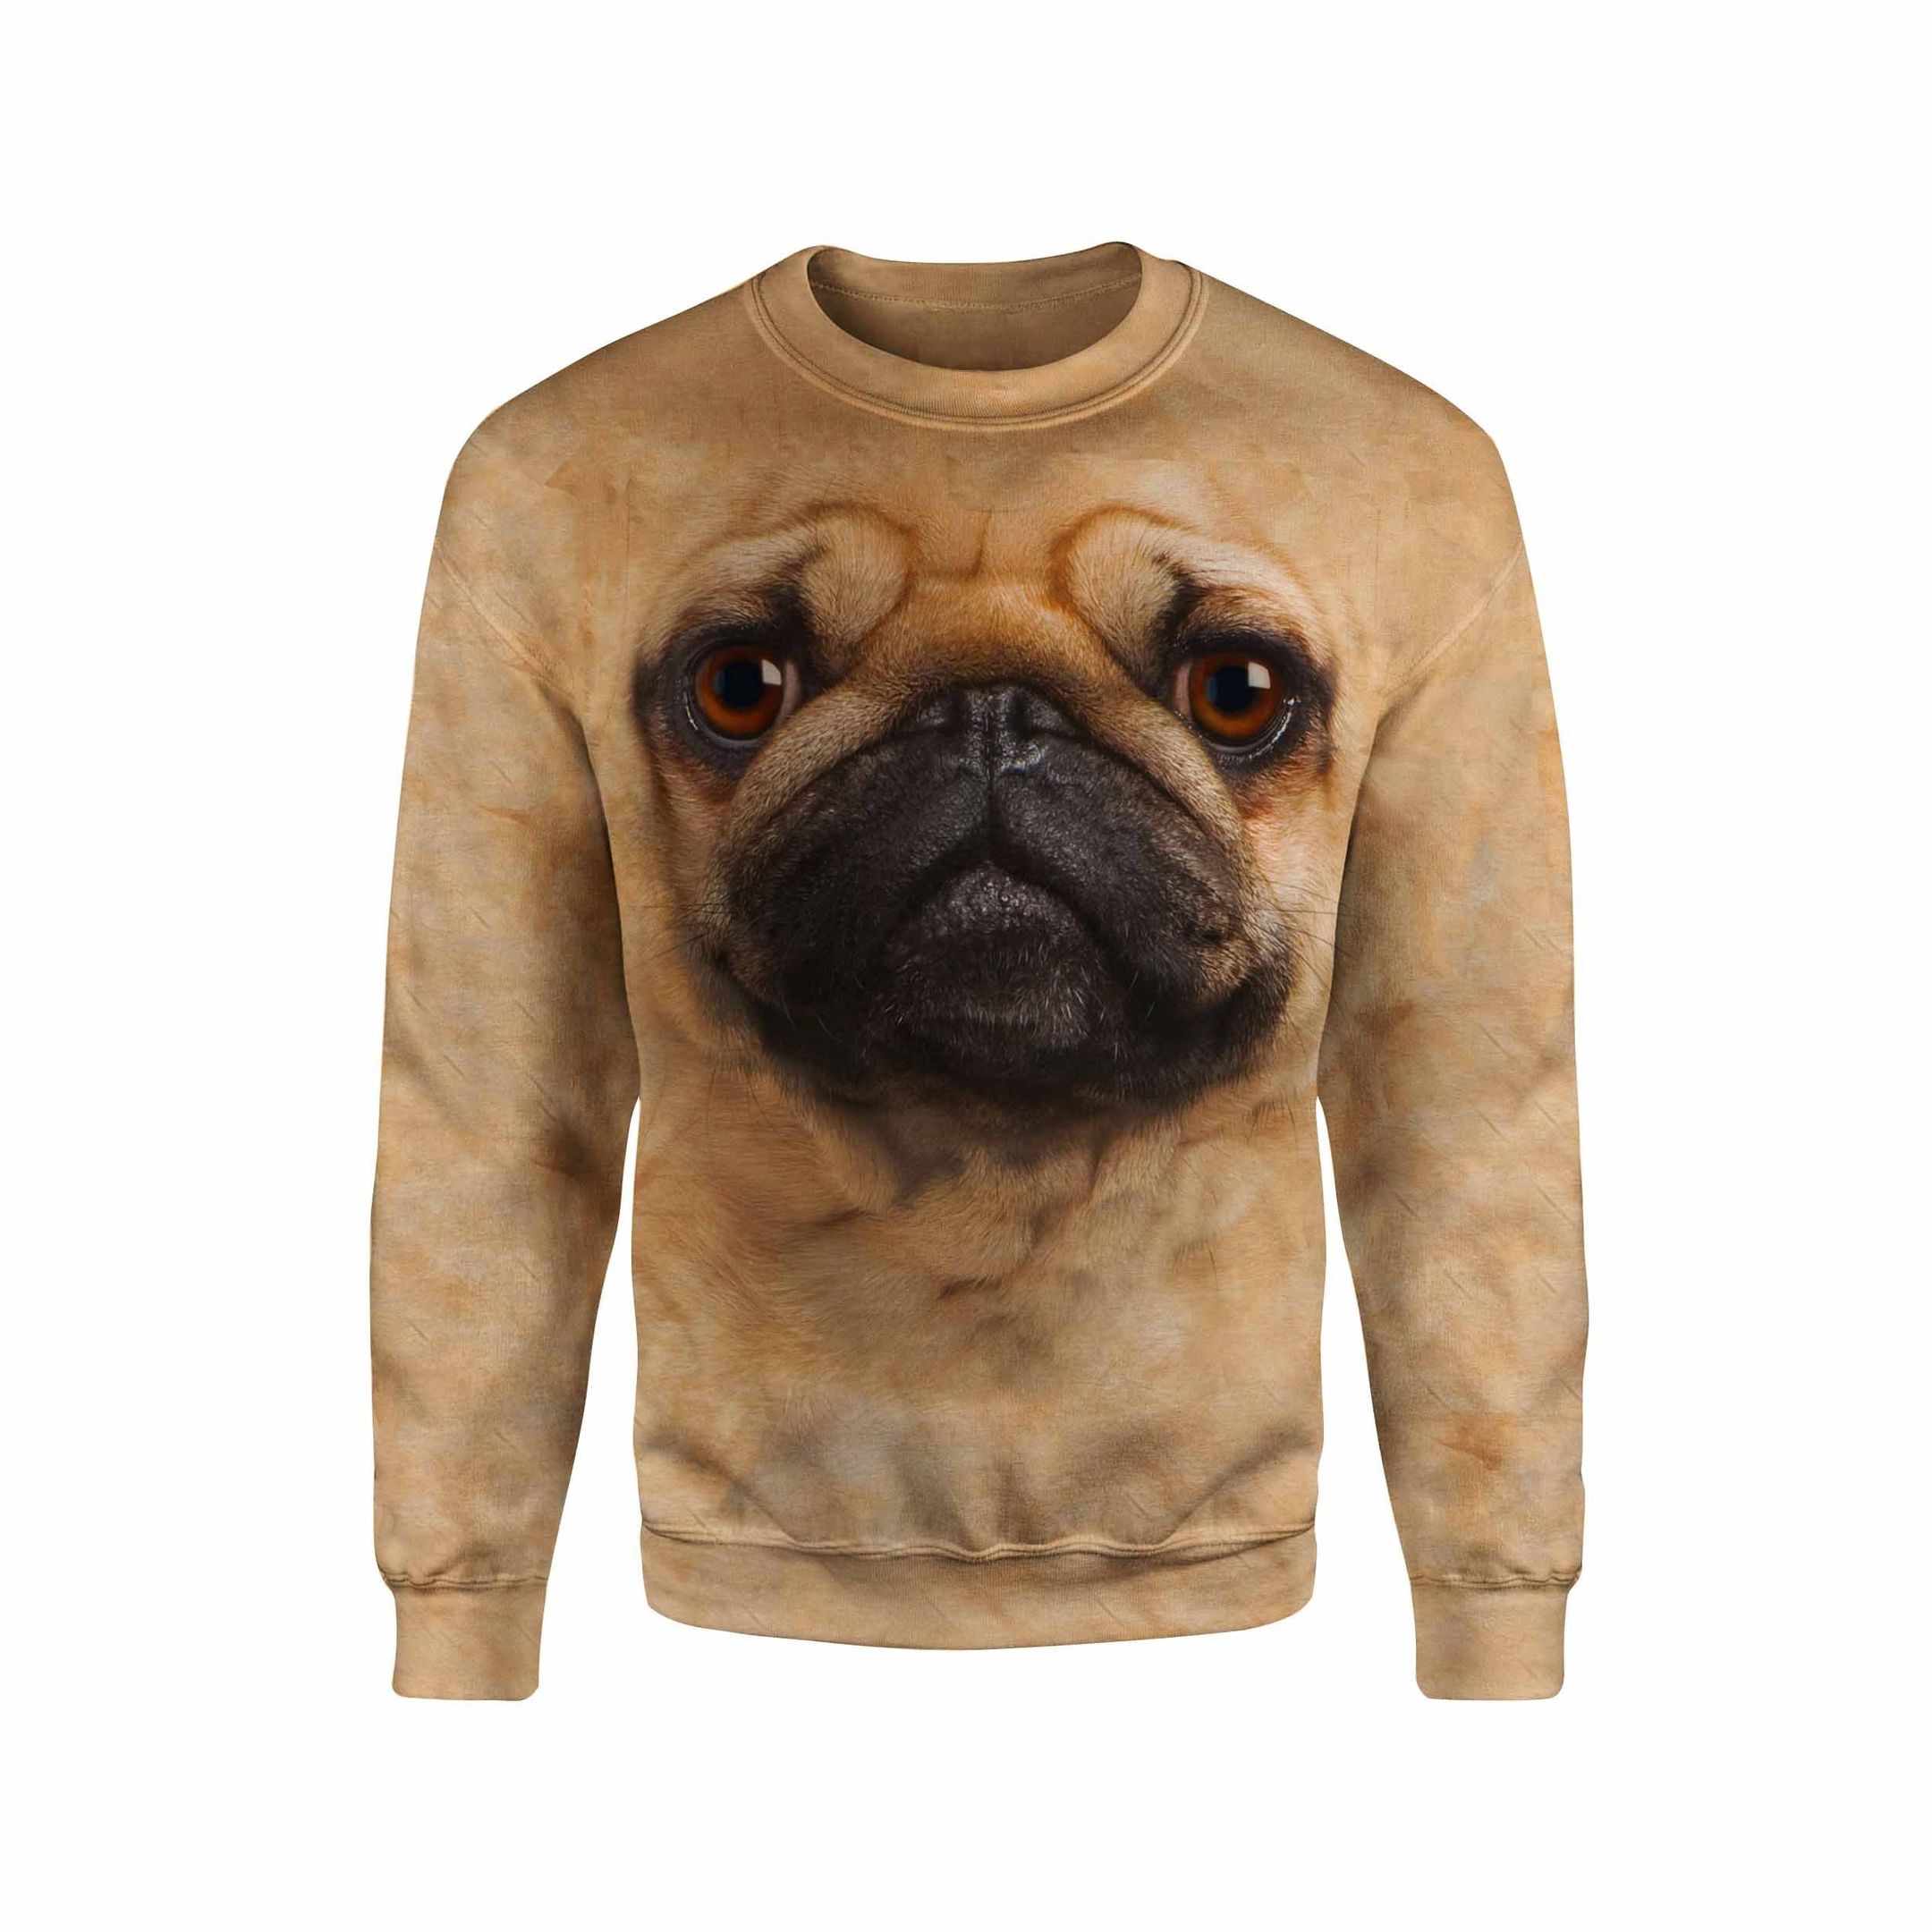 3D All Over Printed Pug Sweatshirt